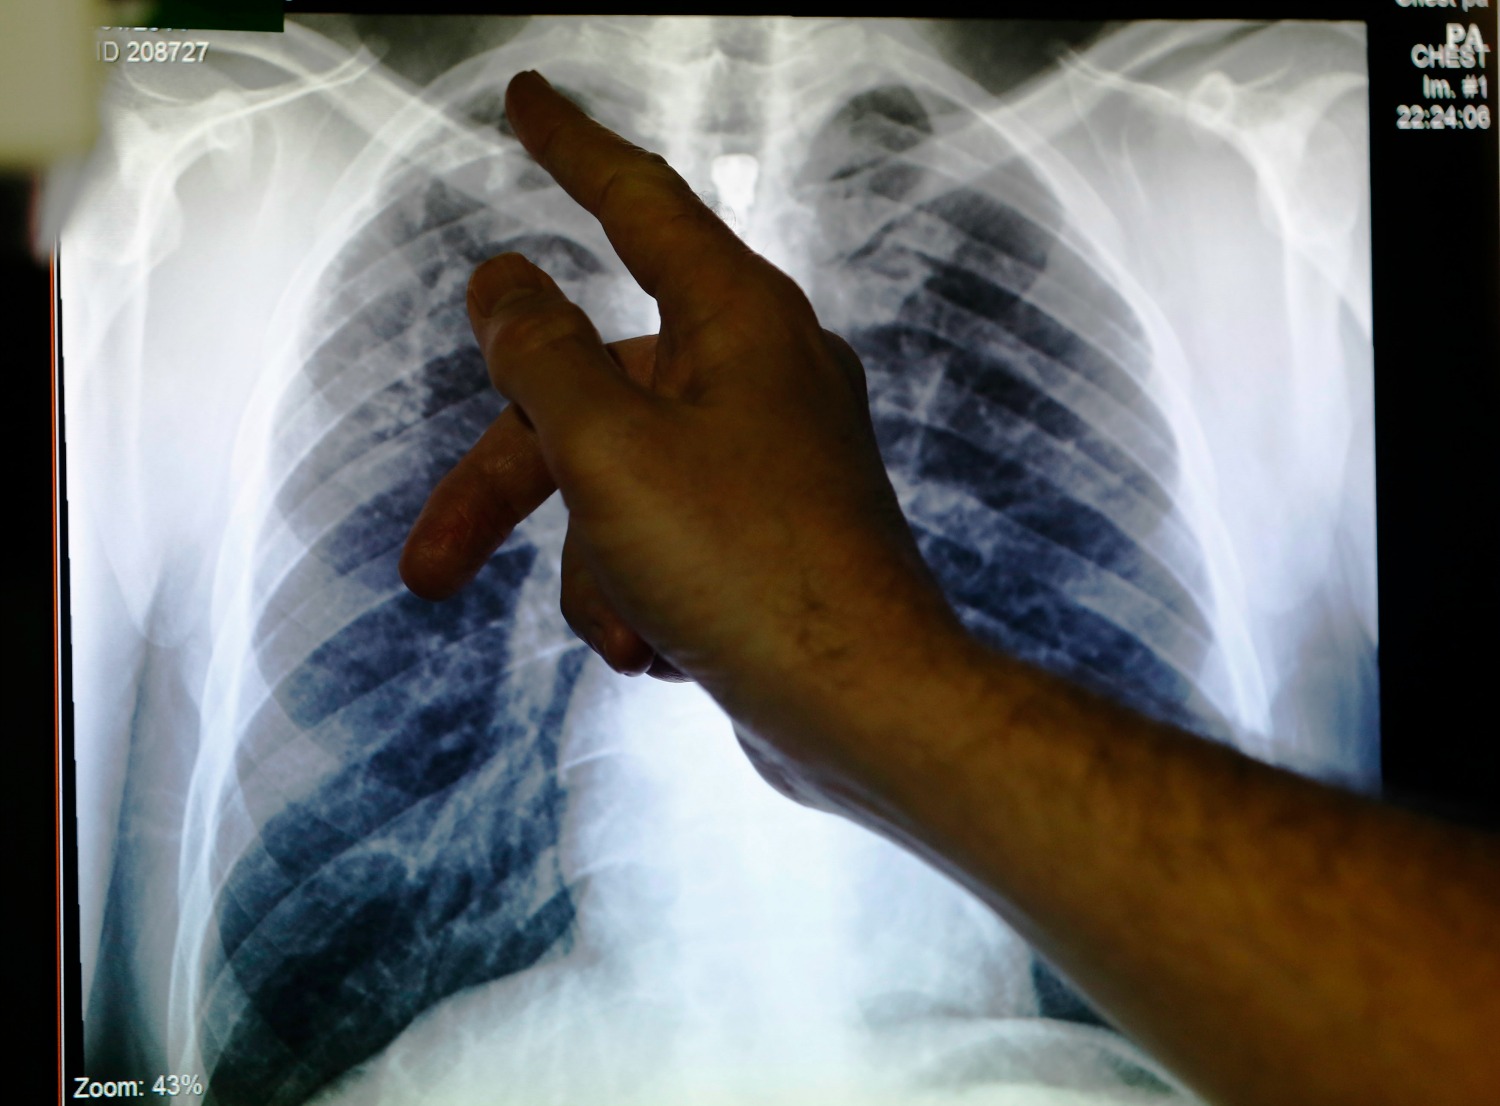 La tuberculosis mata a 1,8 millones de personas